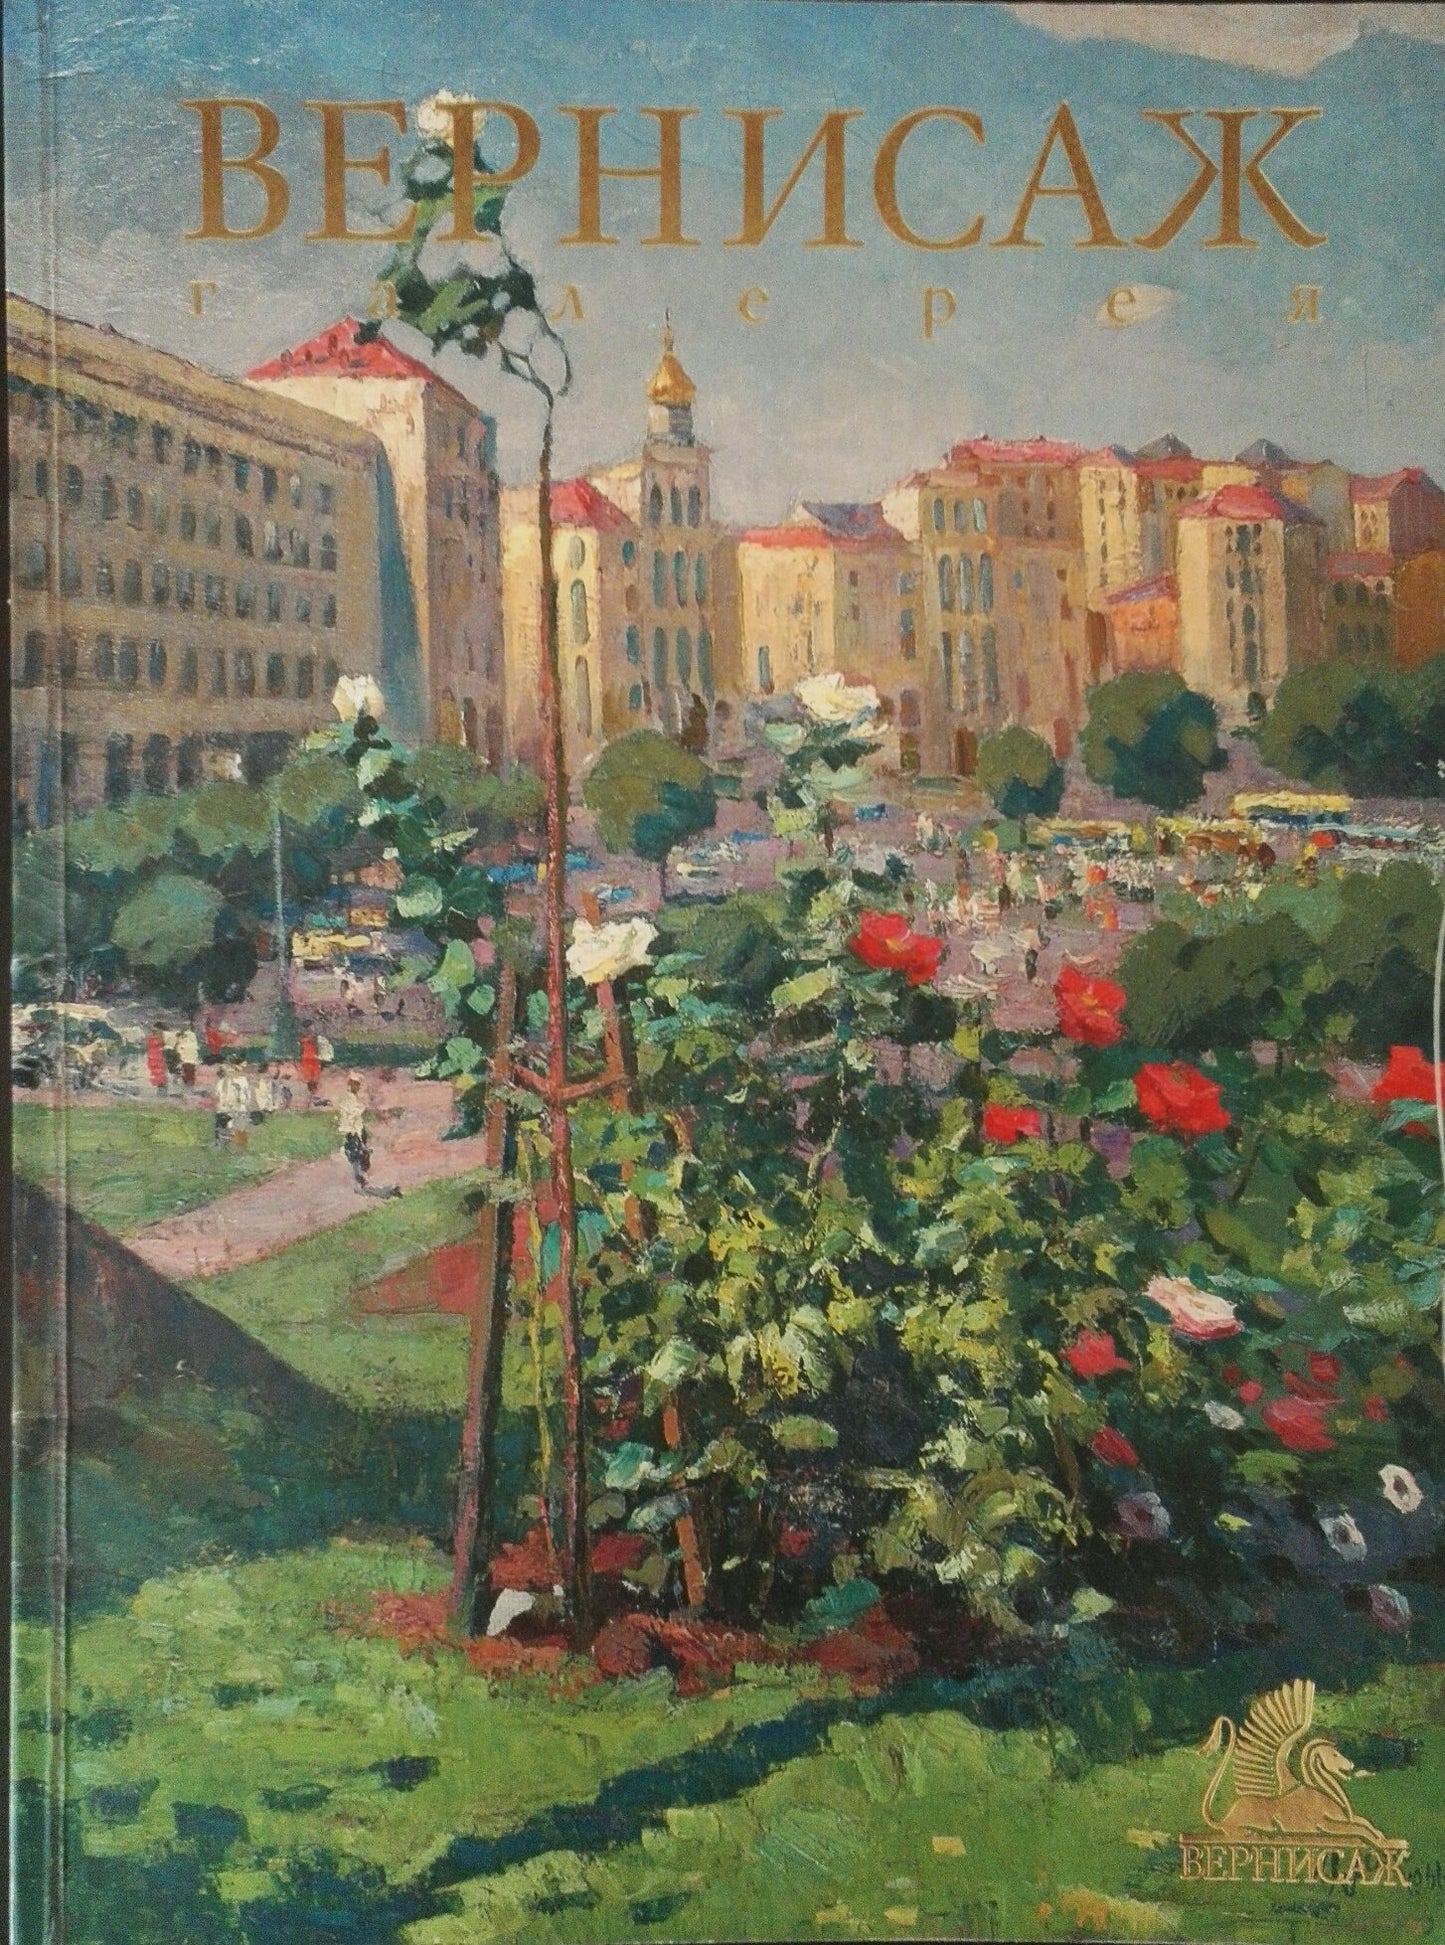 Oil painting Daisies Polyakova Lyudmila Valentinovna